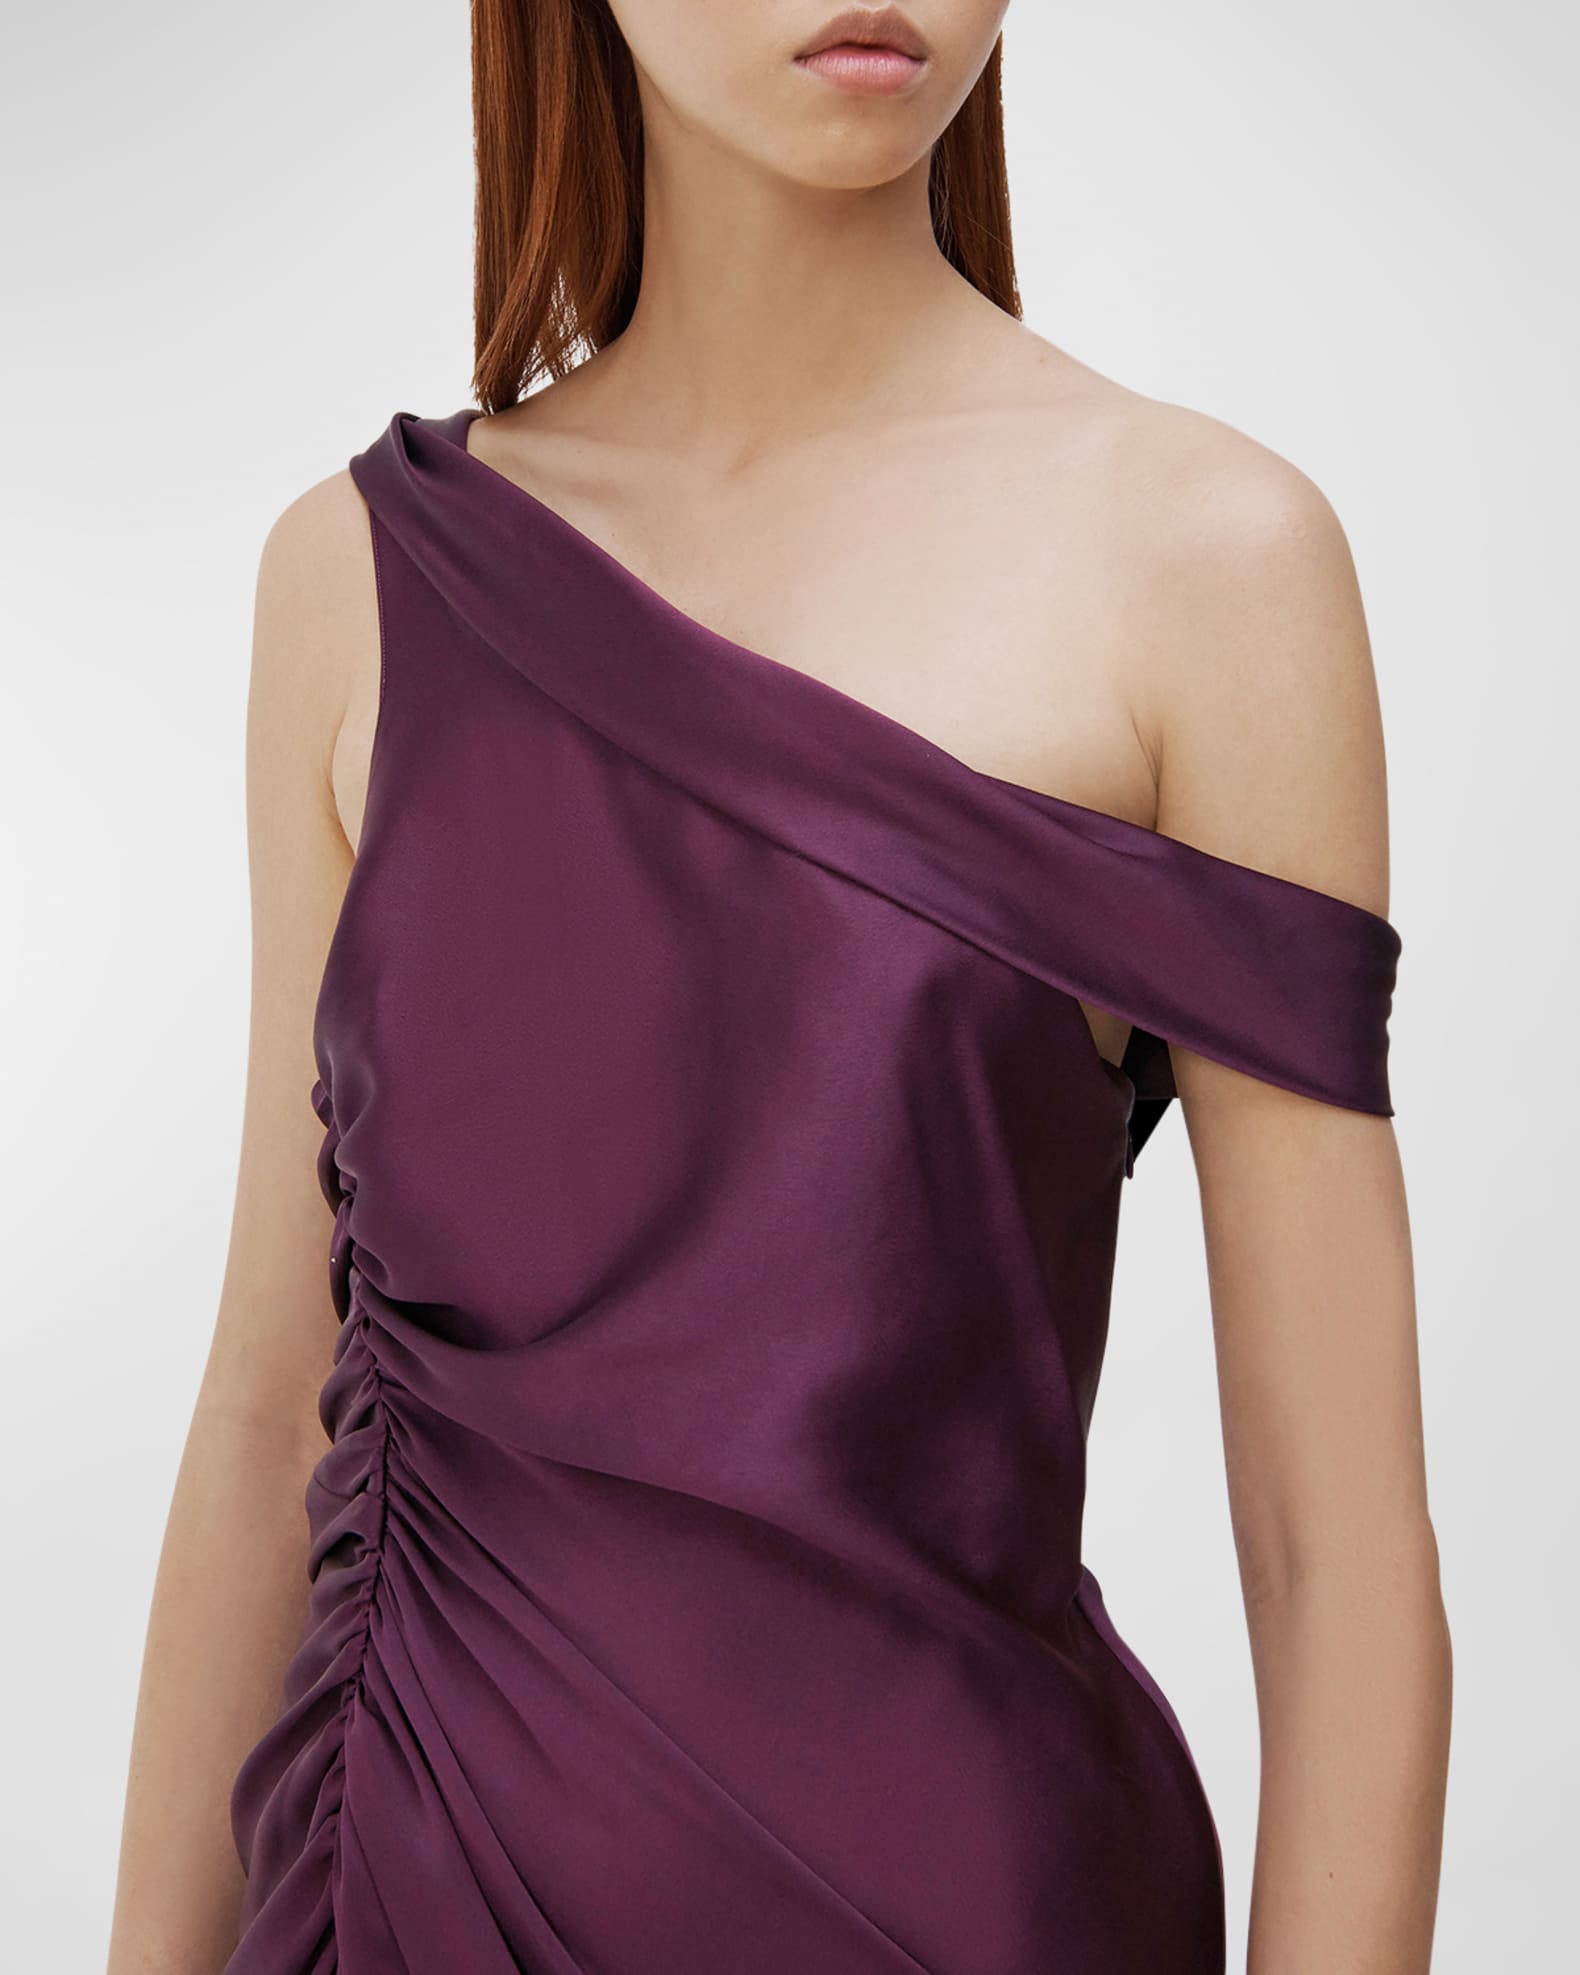 SIMKHAI Sahar One-Shoulder Ruched Column Gown | Neiman Marcus